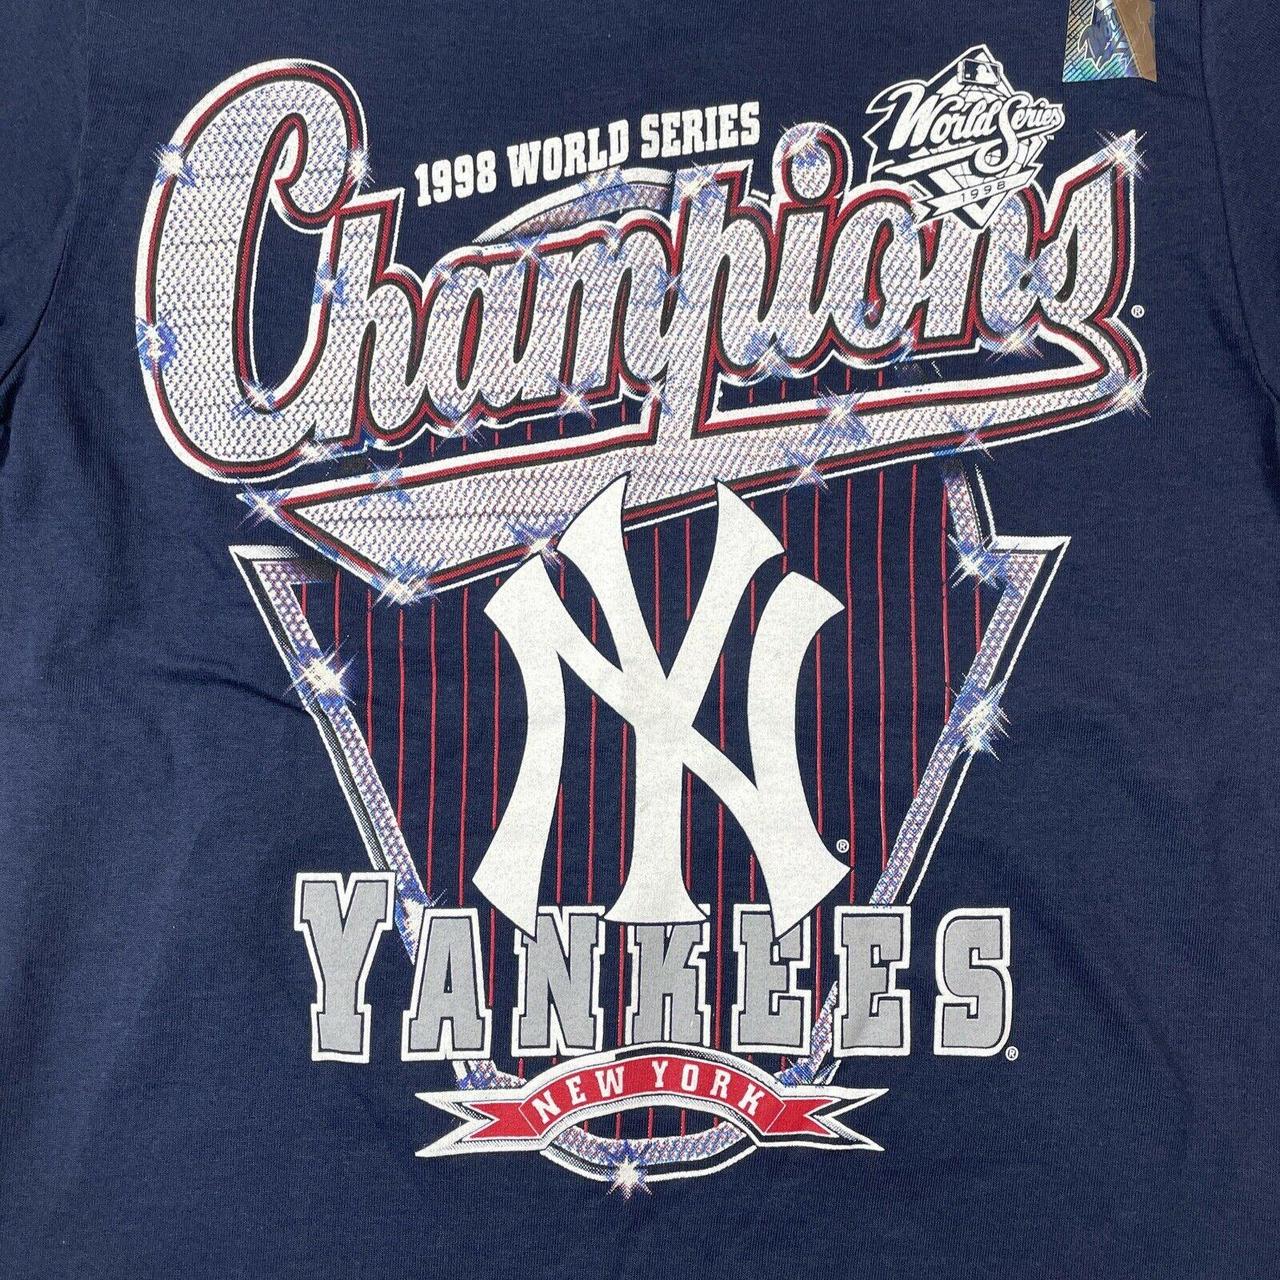 1998 NY Yankees Starter World Series Champions T-Shirt